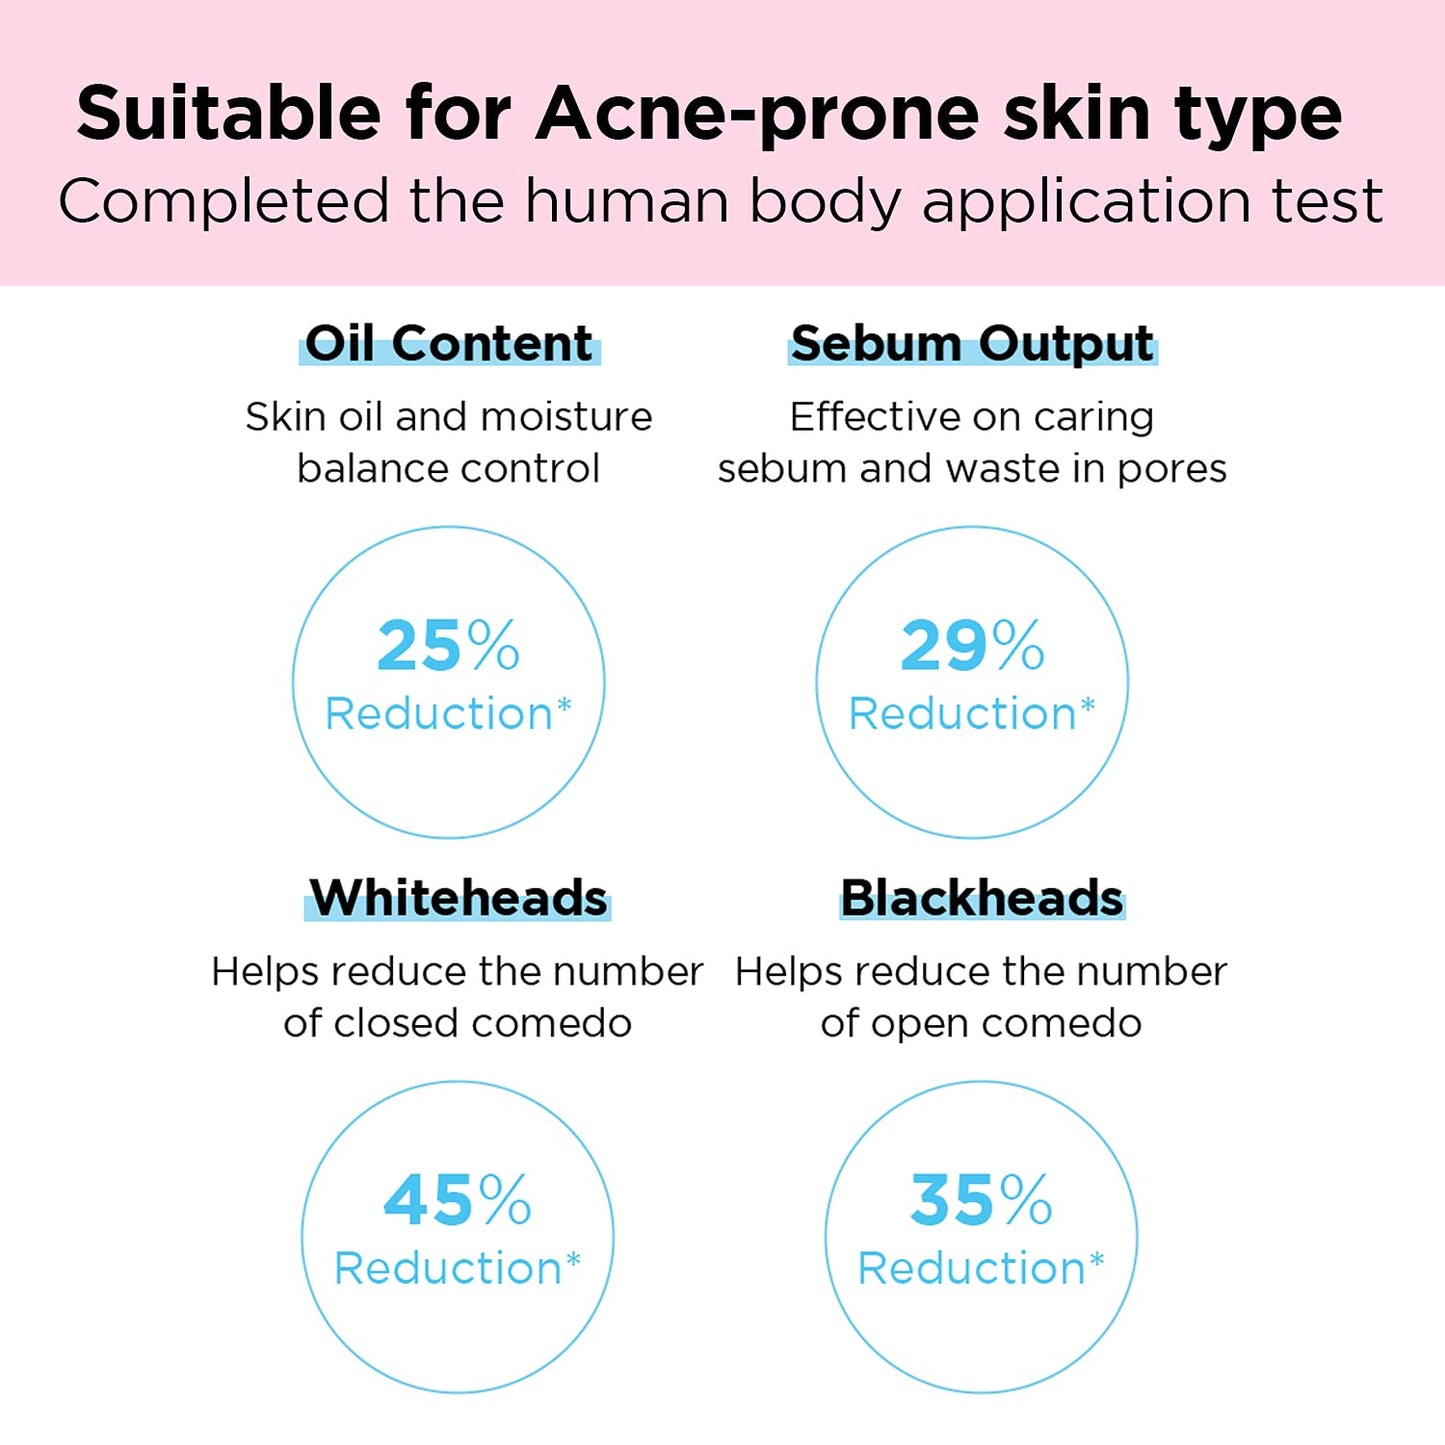 SKINRxLAB Made Cera Cream 50ml (1.69 fl.oz.) - Acne and Redness Relief Face Moisturizer, Sebum Control, Improving Skin Barrier with Ceramide and Madecassoside, Anti-Aging and Pore Minimizing Face Cream